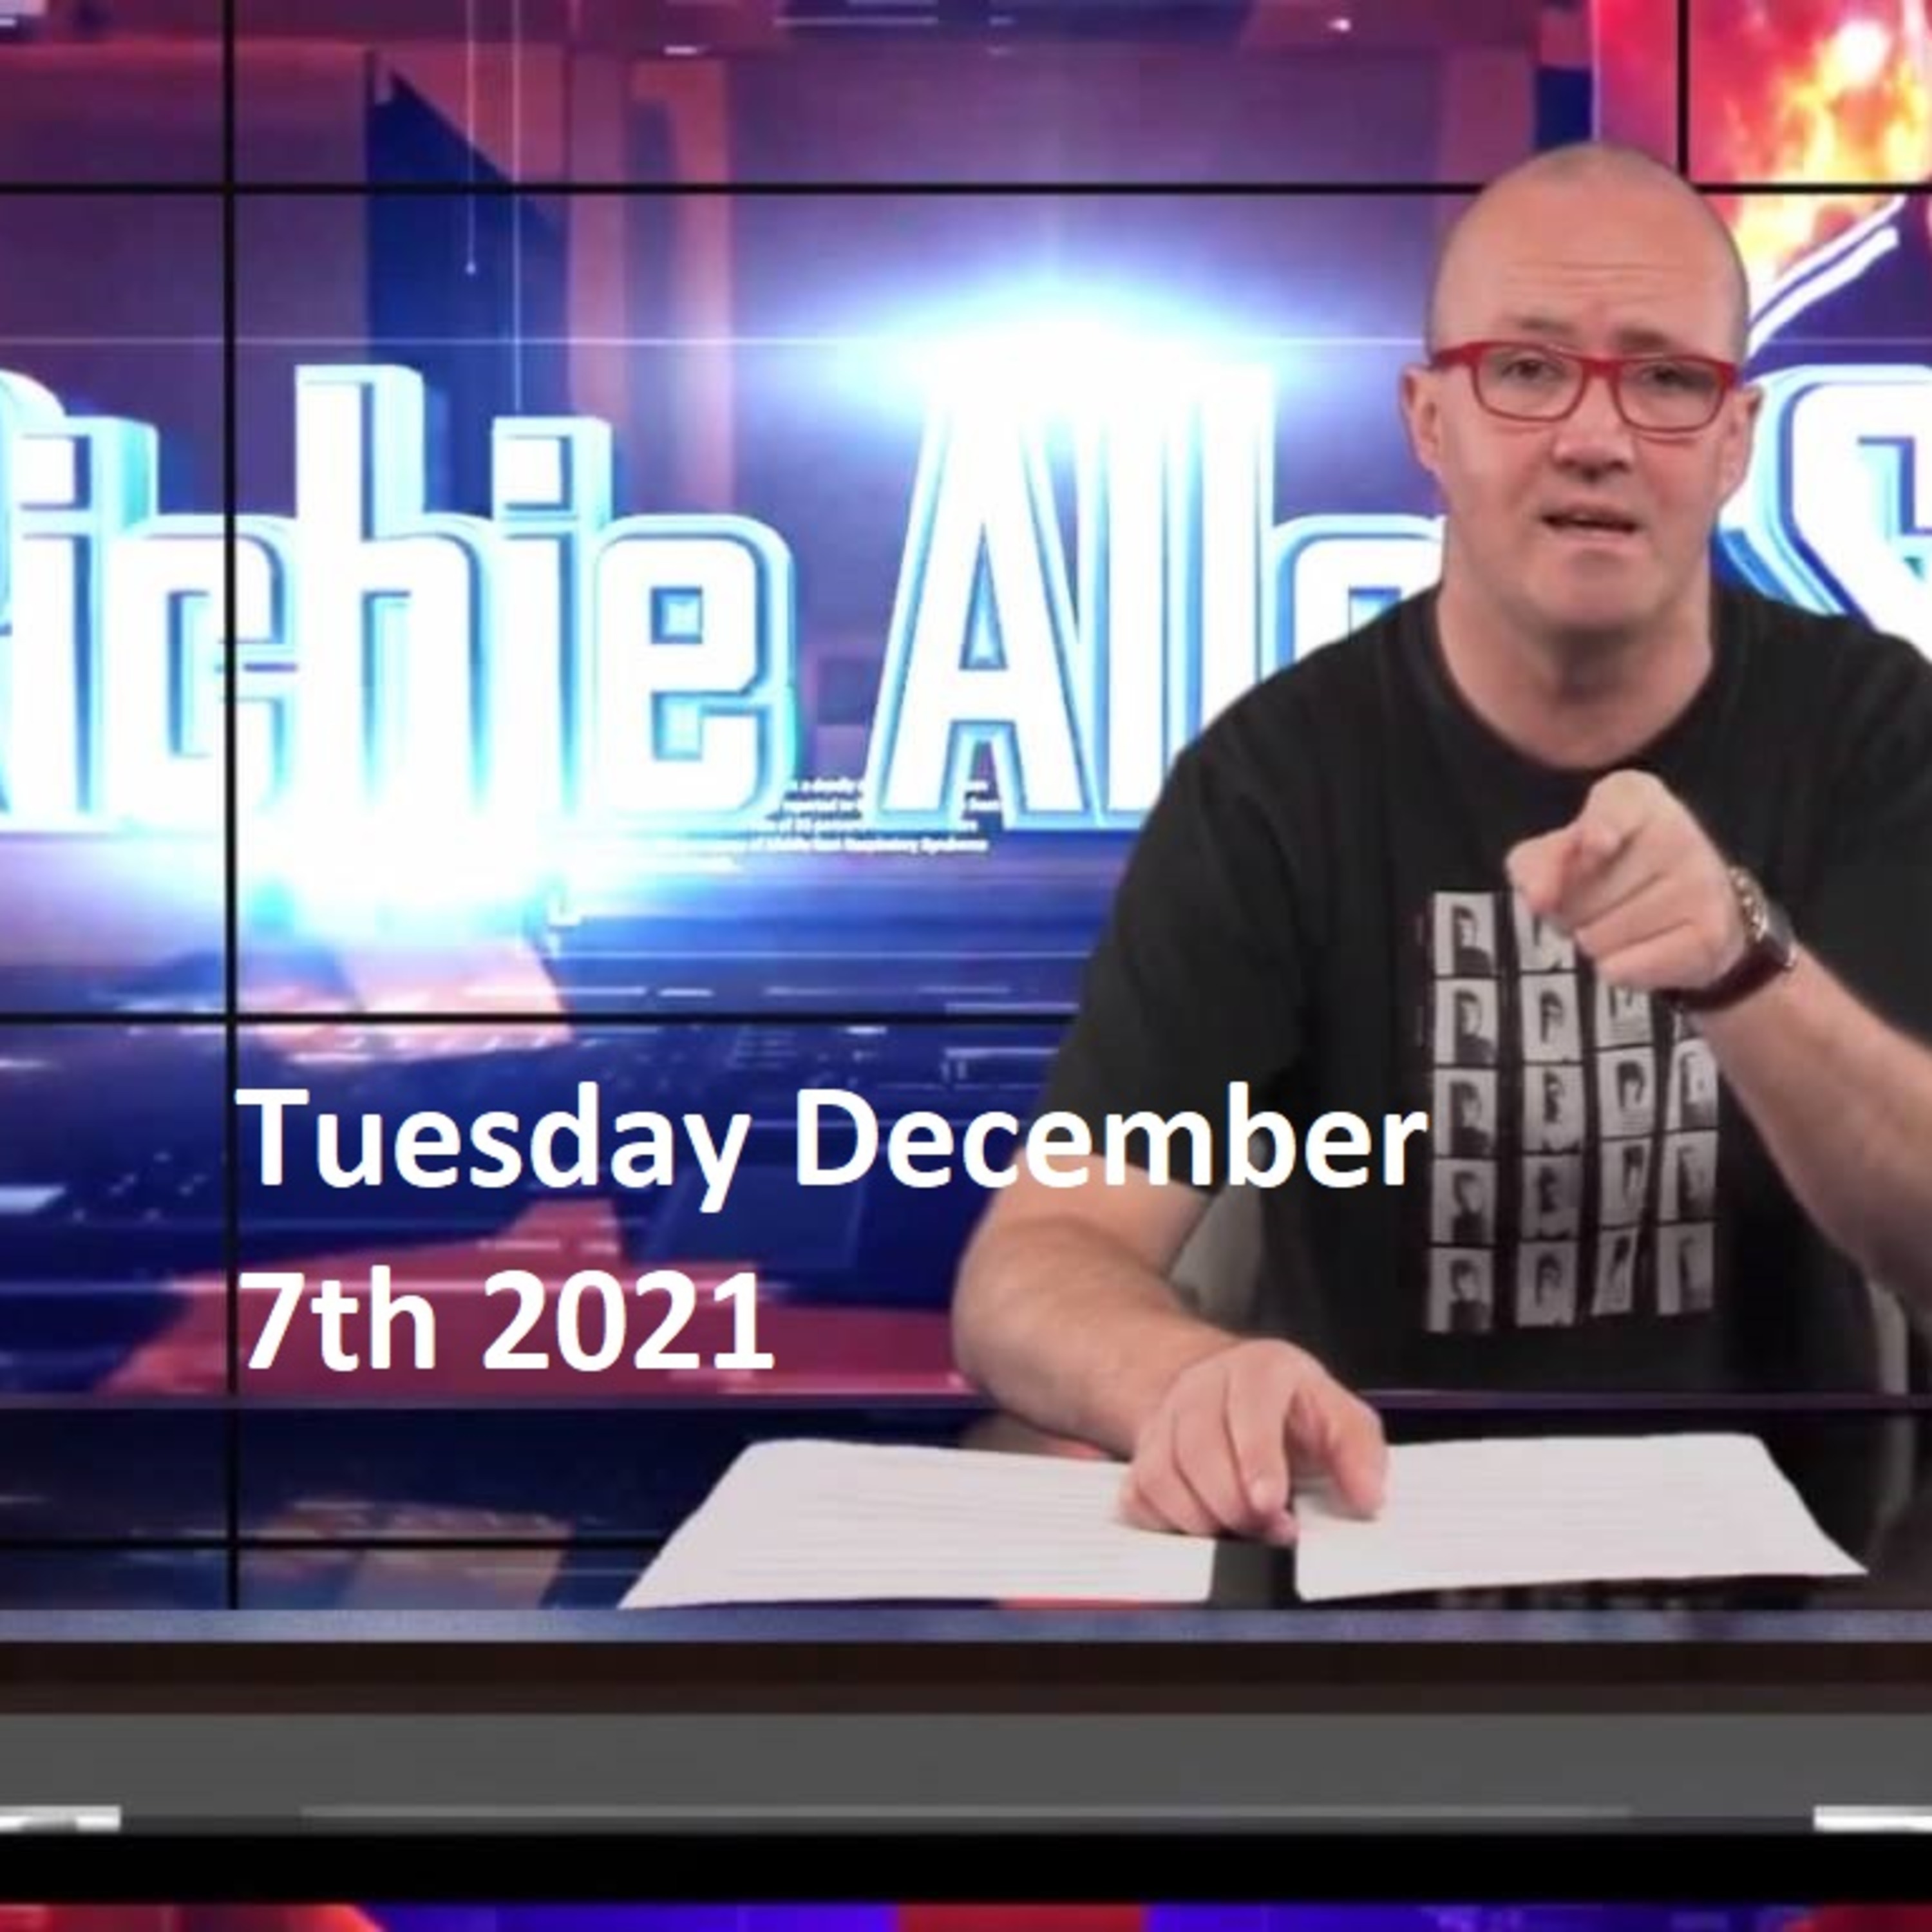 Episode 1377: The Richie Allen Show Tuesday December 7th 2021